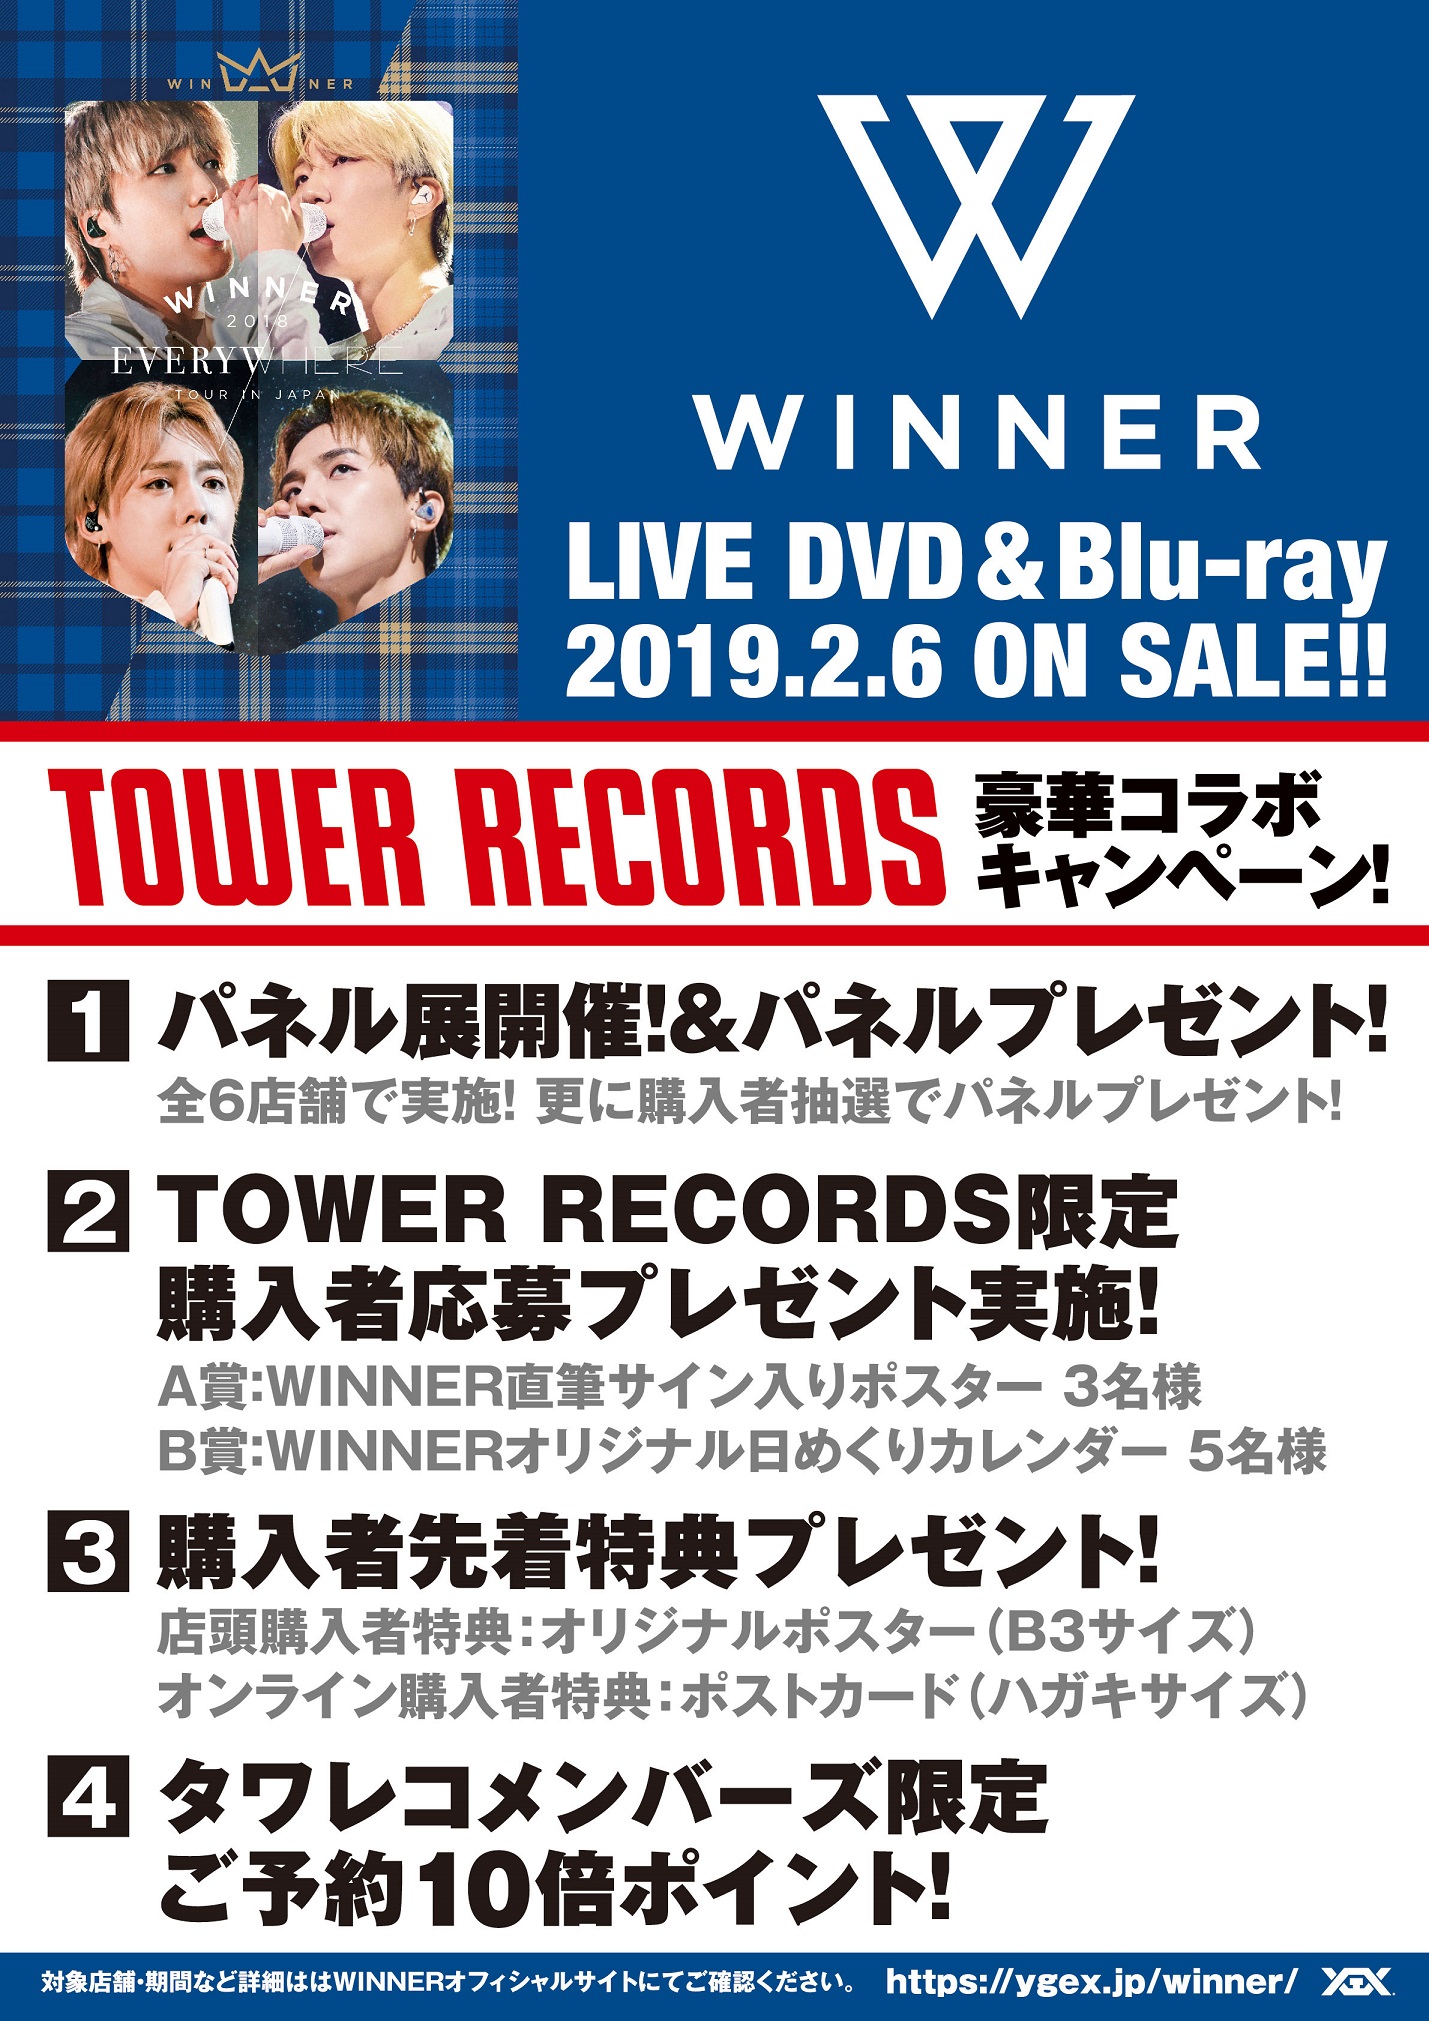 WINNER 2018 EVERYWHERE TOUR初回生産限定盤ブルーレイの+